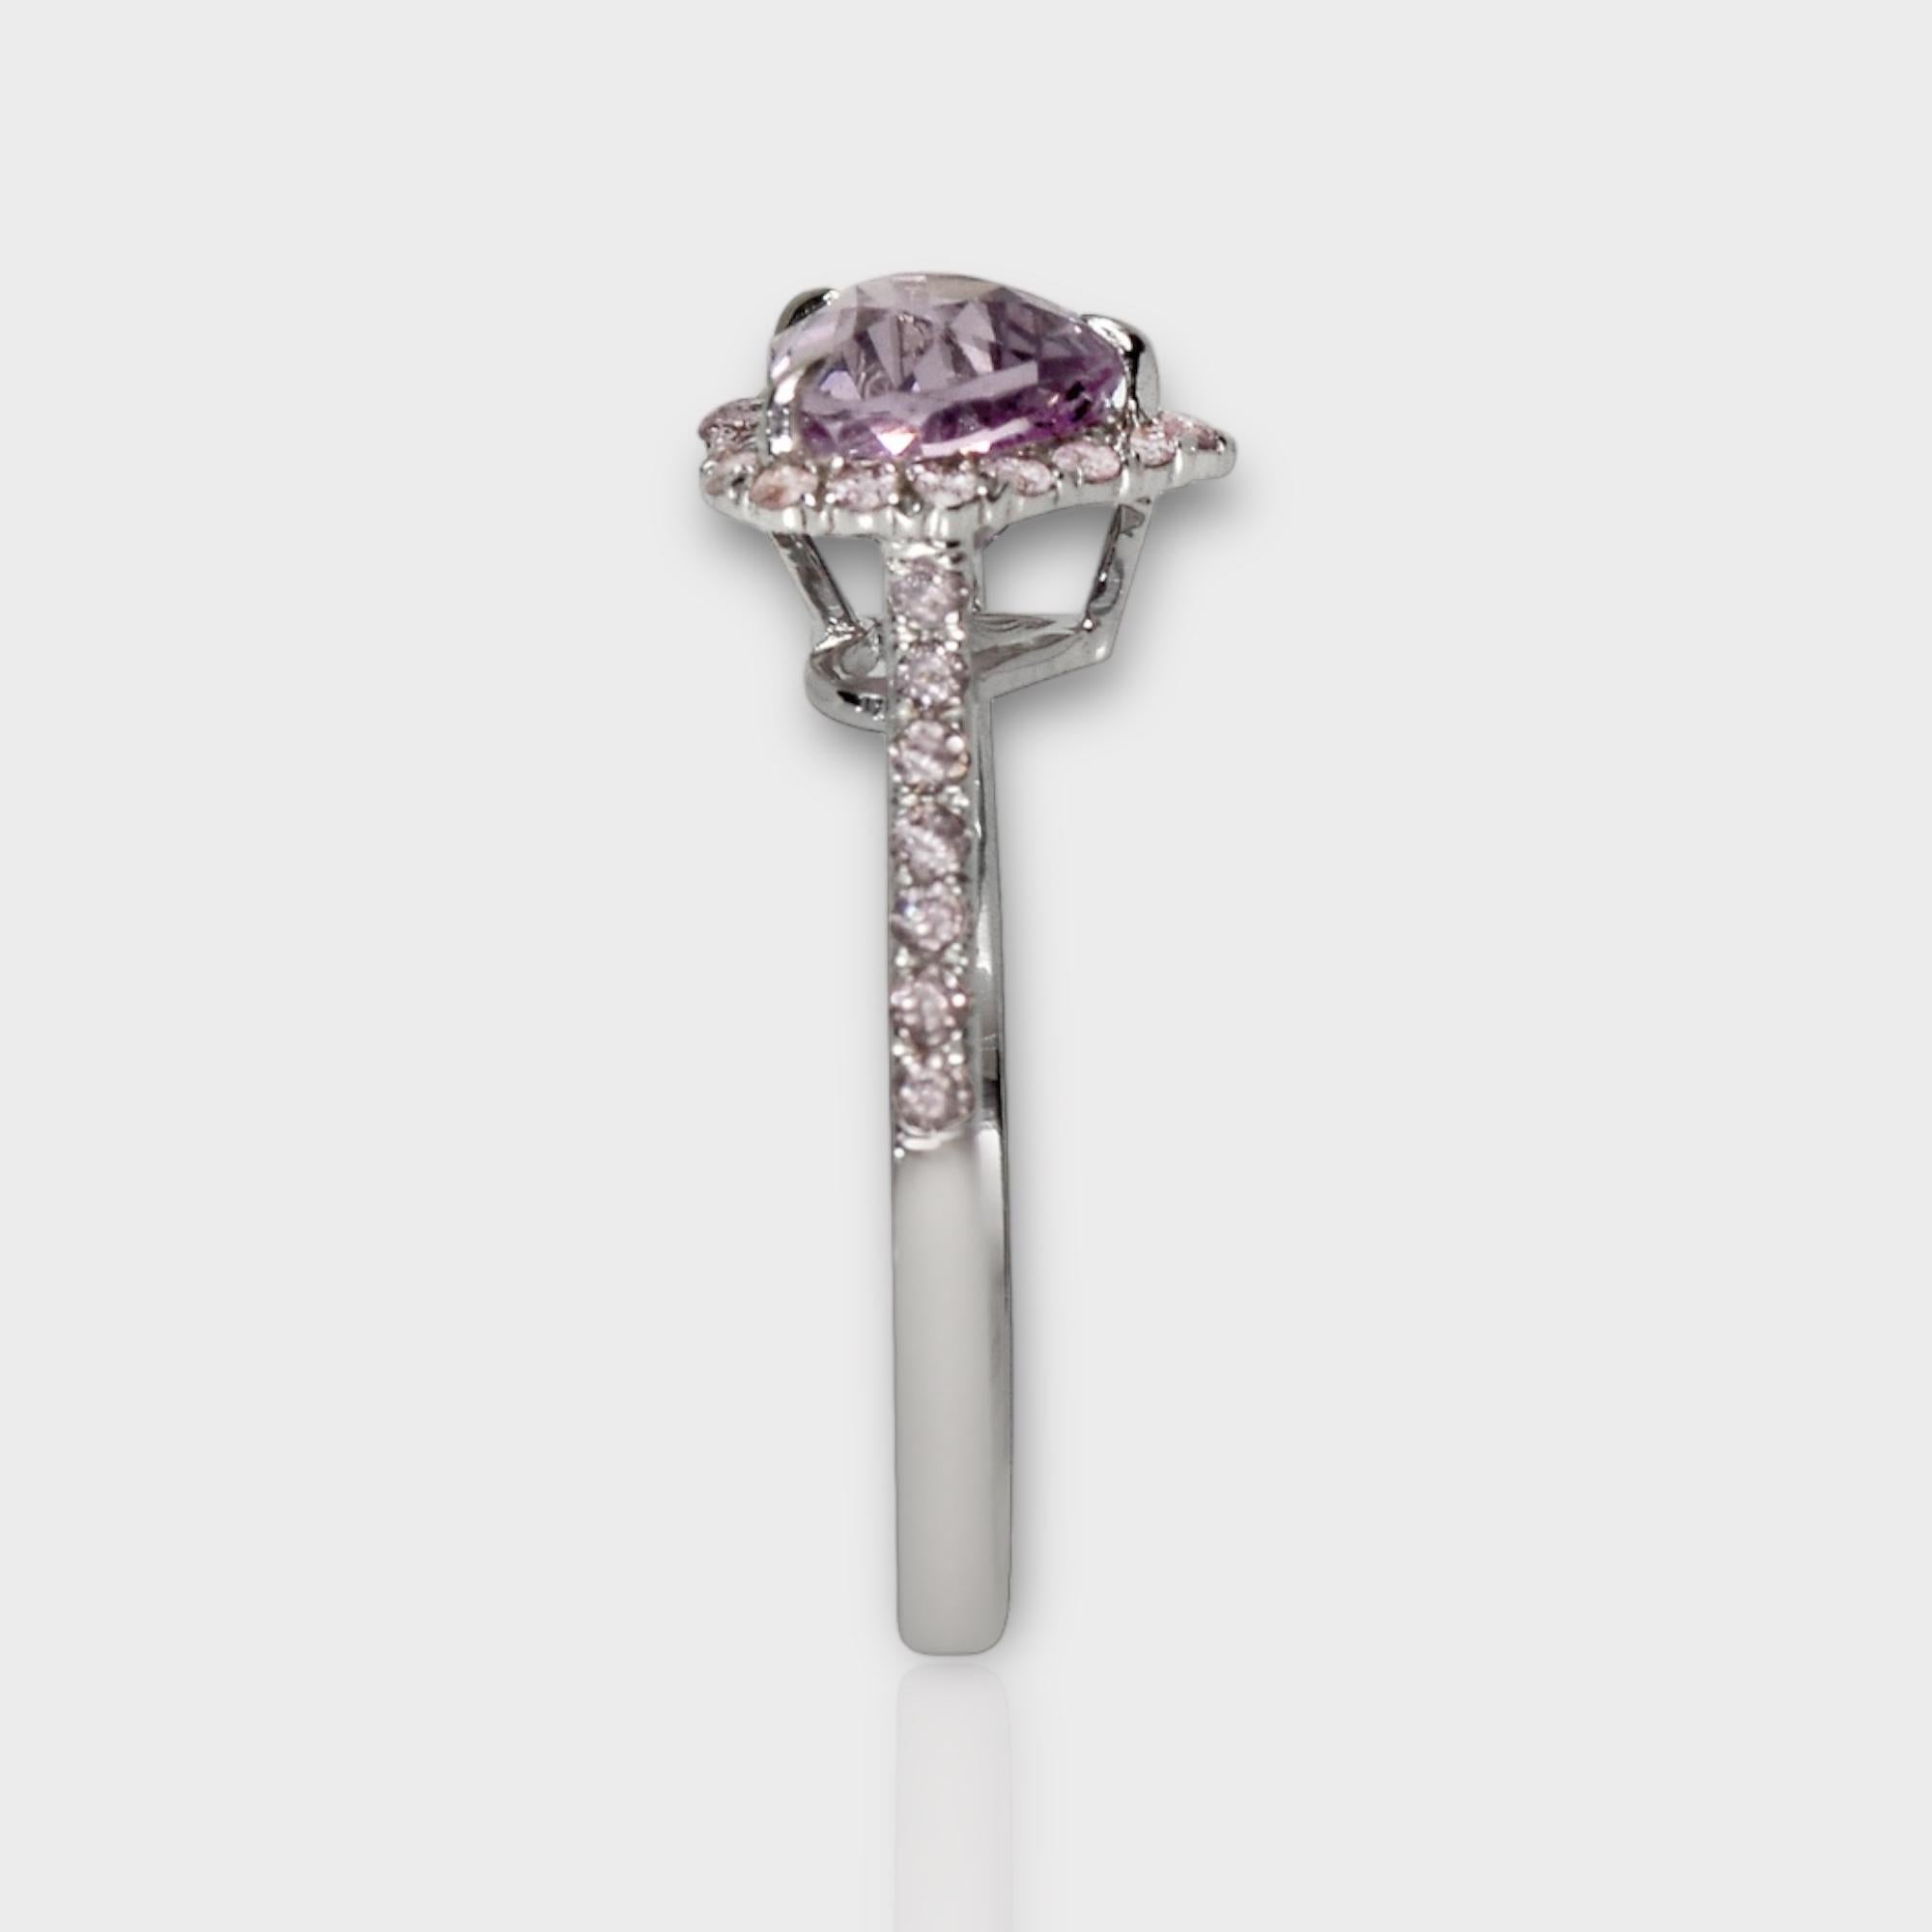 IGI 14K 1.73 Ct Purple Spinel&Pink Diamonds Antique Engagement Ring 1